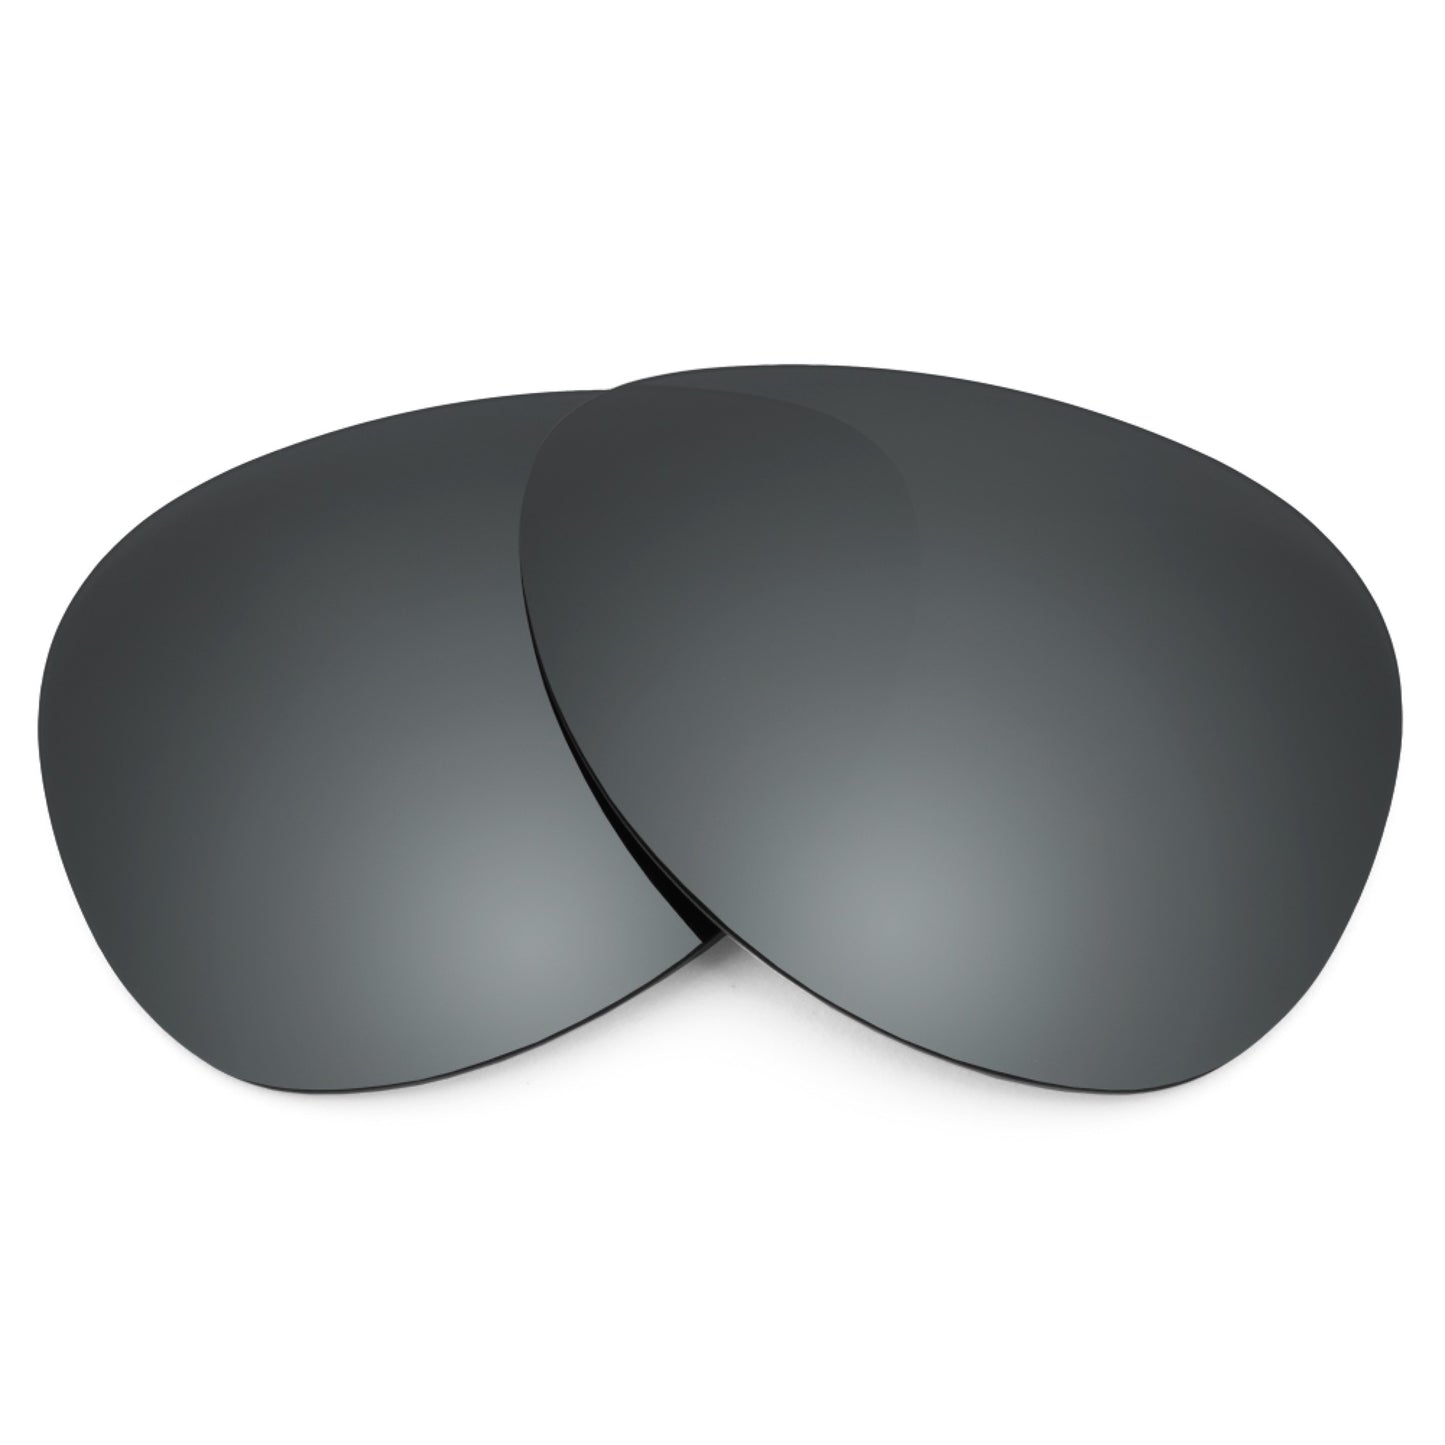 Revant replacement lenses for Ray-Ban RB4147 56mm Elite Polarized Black Chrome